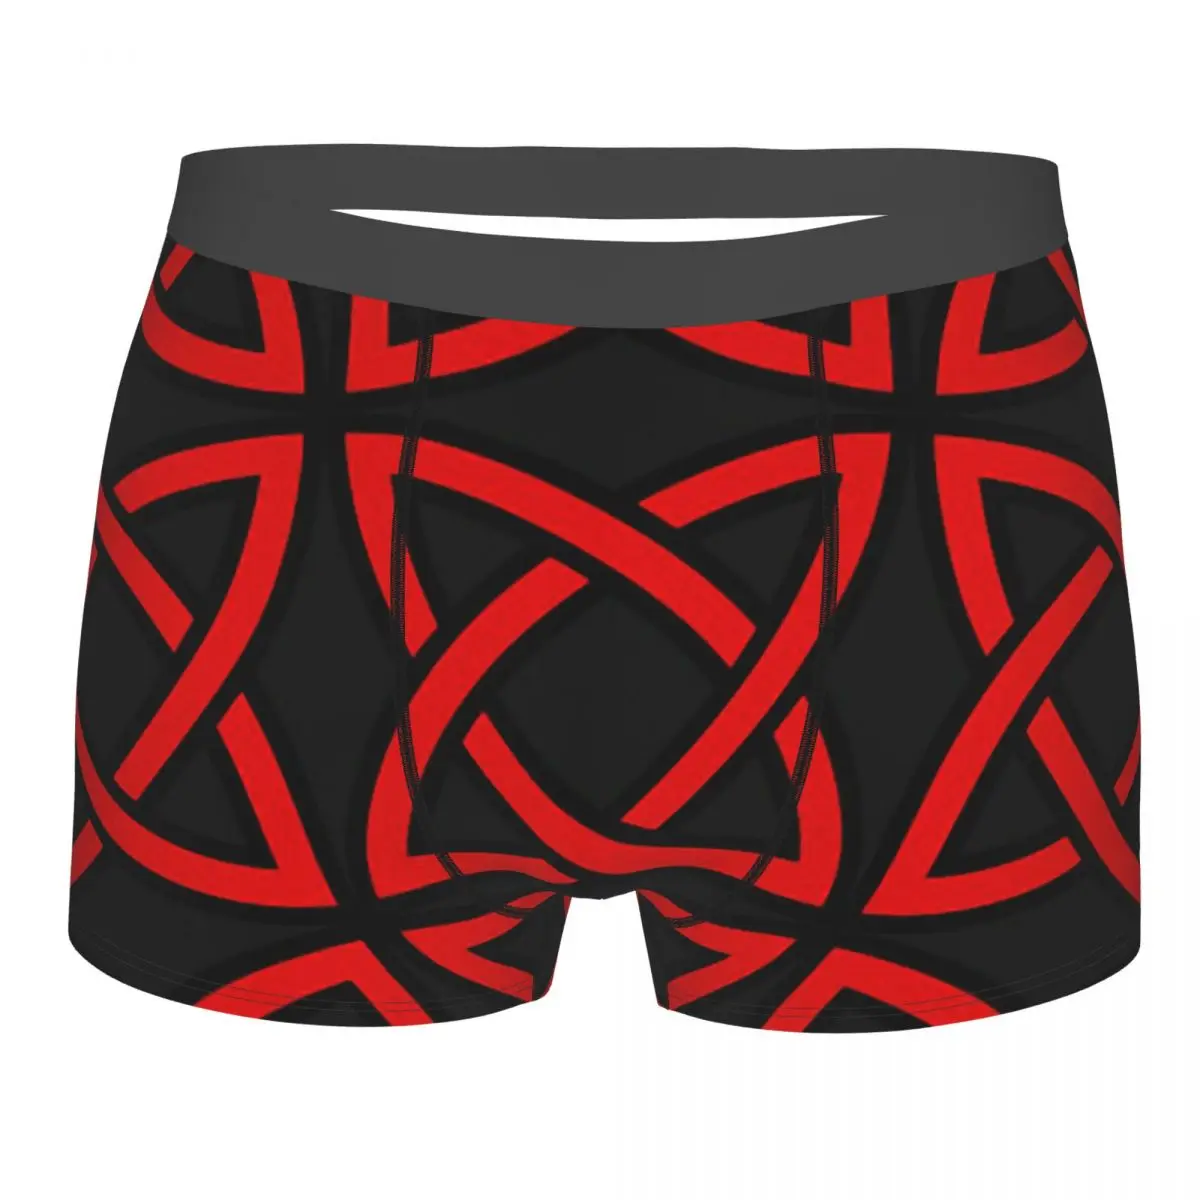 Red Celtic Knot Classic Vikings Underpants Homme Panties Male Underwear Ventilate